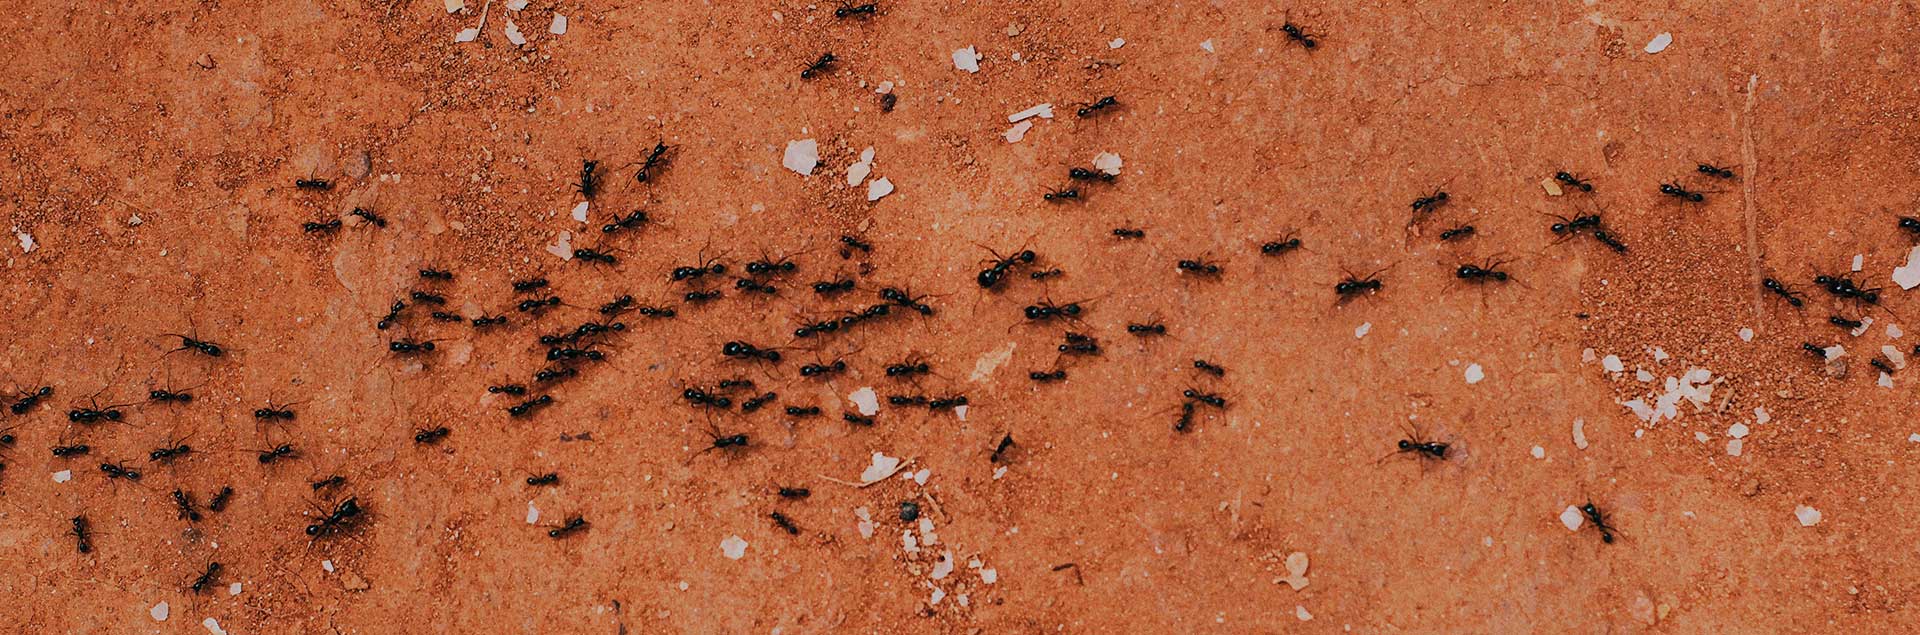 Ant Infestation Control Methods: Gel vs Spray